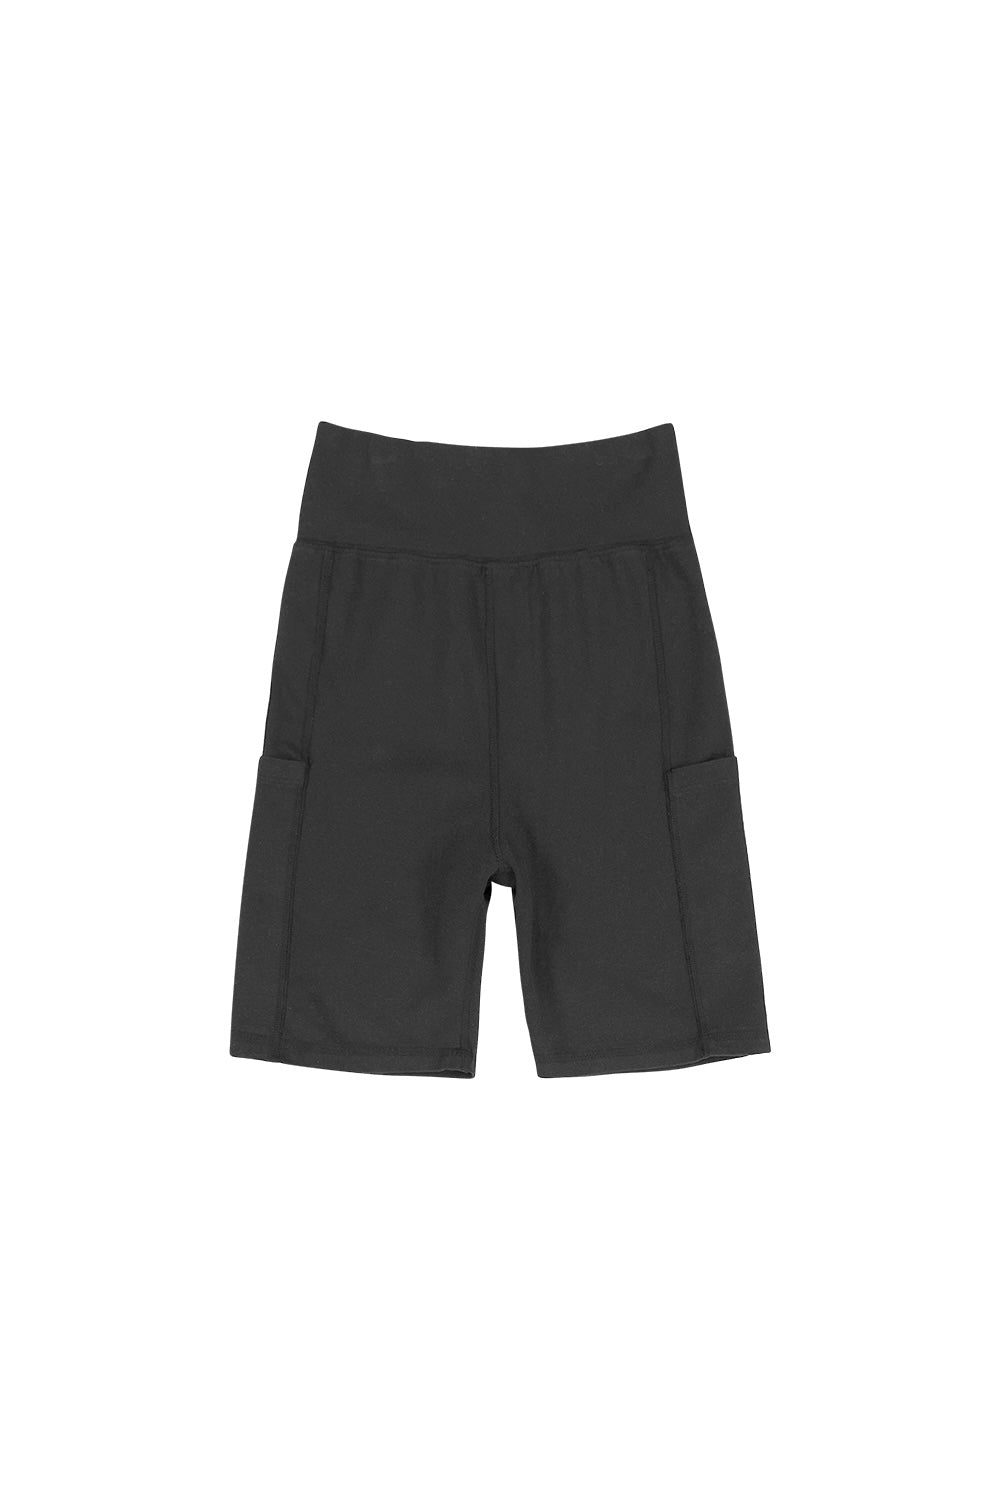 Bike Short with Pockets | Jungmaven Hemp Clothing & Accessories / Color: Black